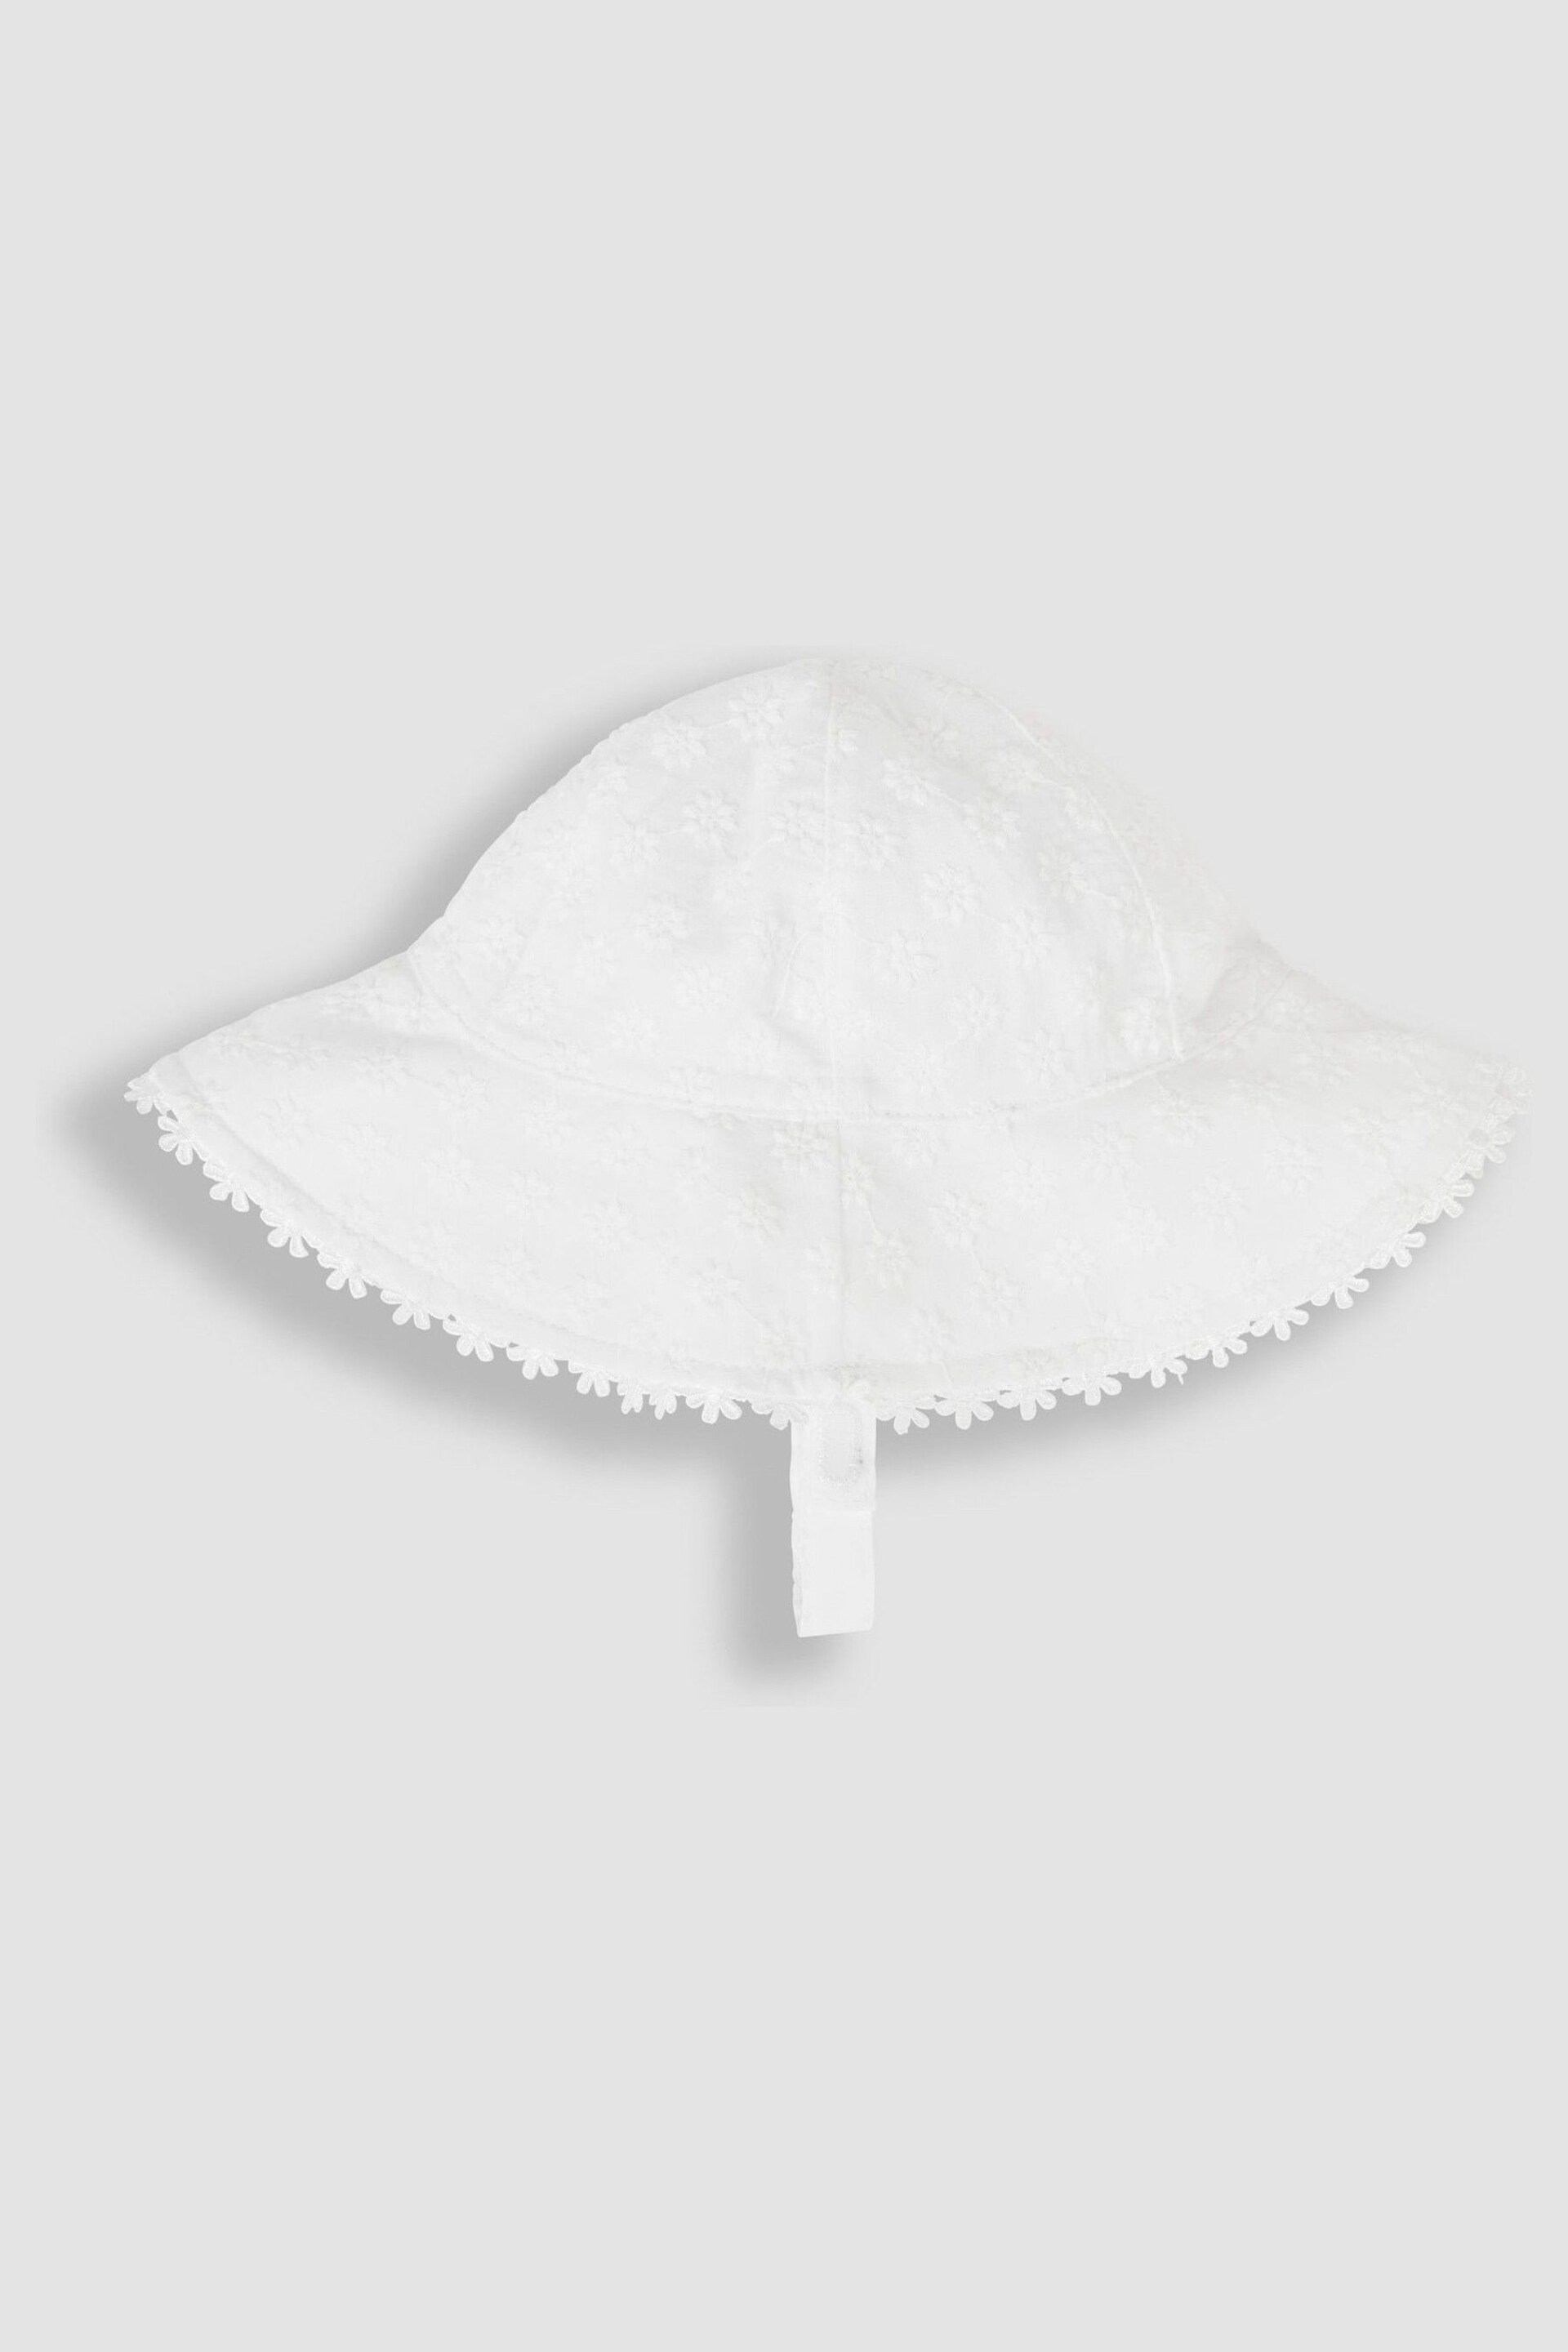 JoJo Maman Bébé White Broderie Floppy Hat - Image 1 of 3